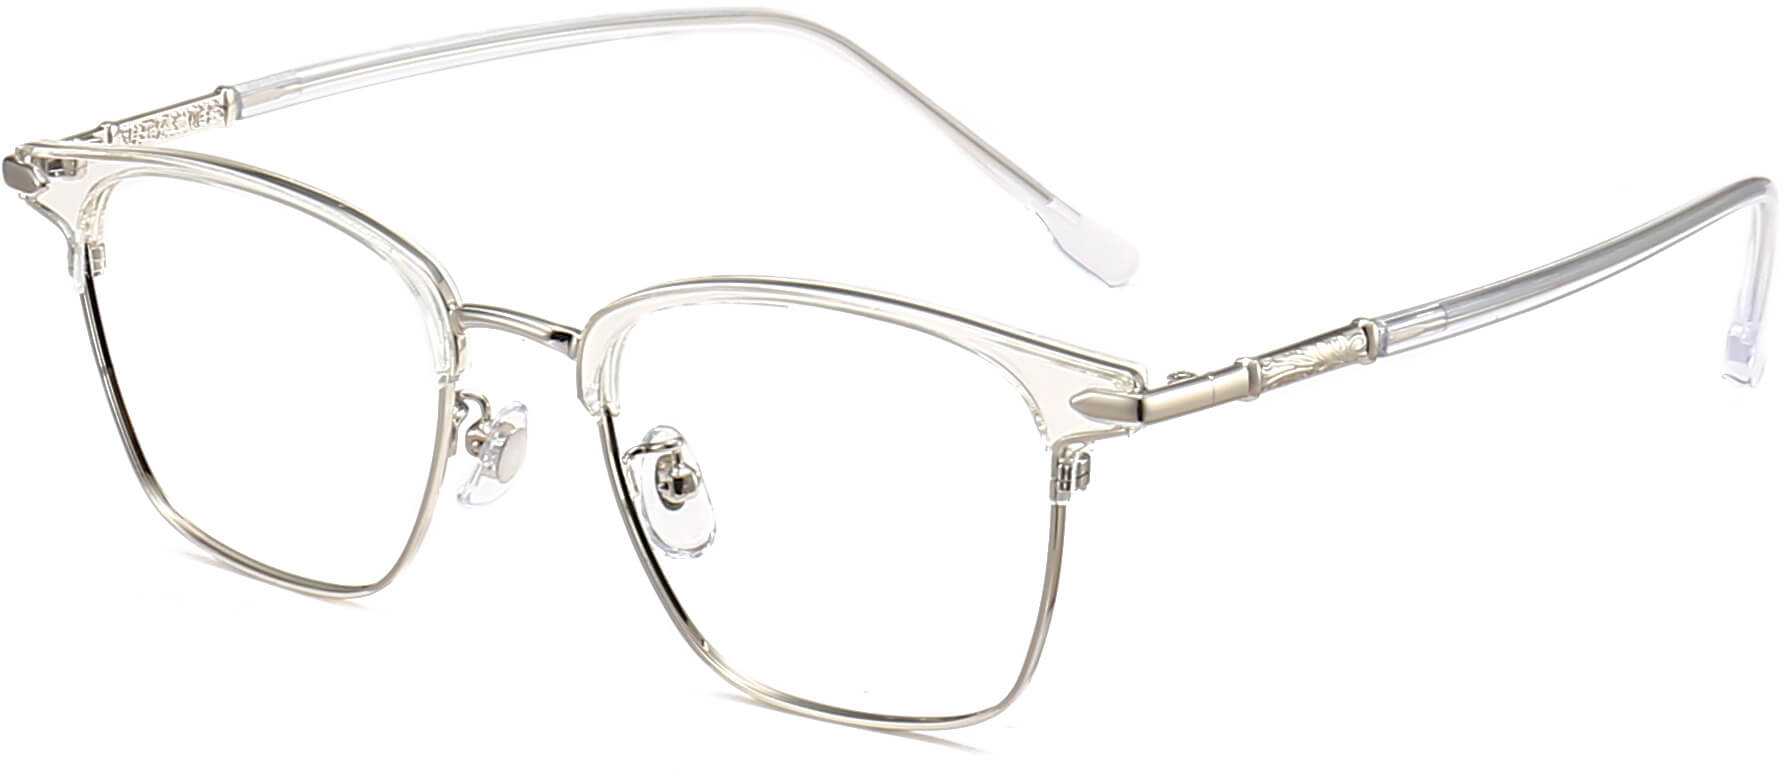 Khari Browline Clear Eyeglasses from ANRRI, angle view